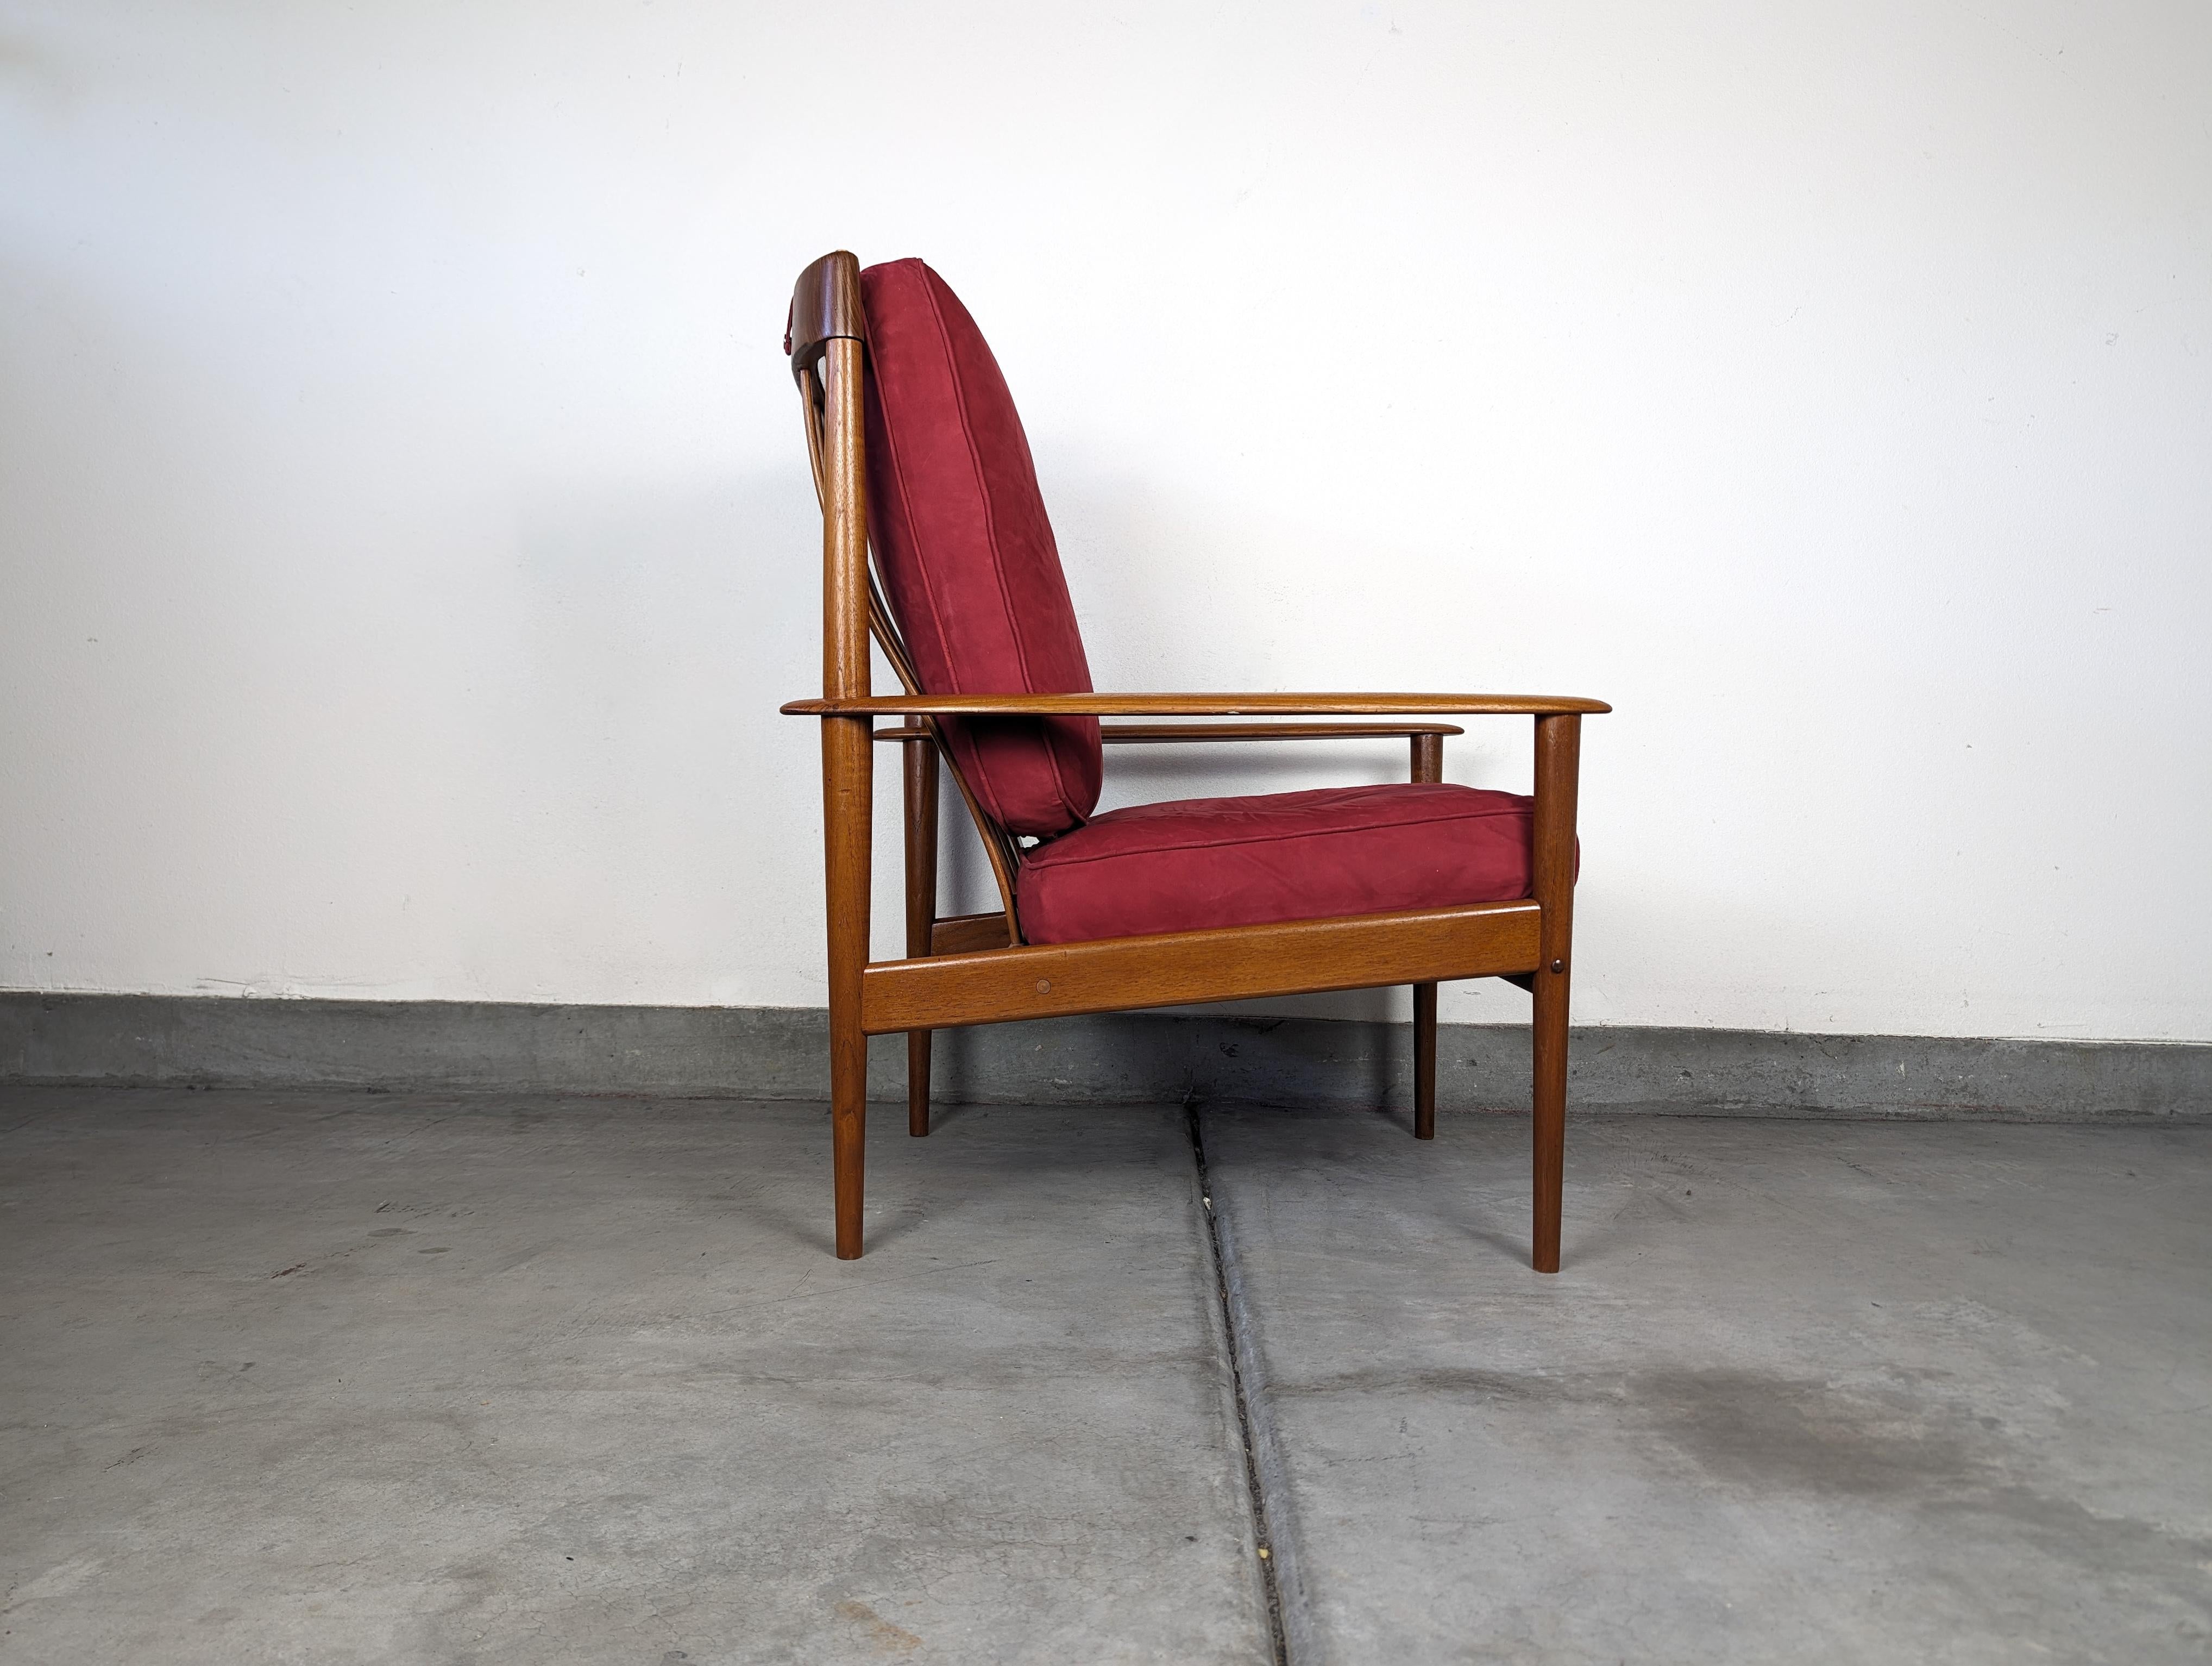 Danish Mid-Century Modern Lounge Chair by Grete Jalk, PJ56 Highback Model, c1960s For Sale